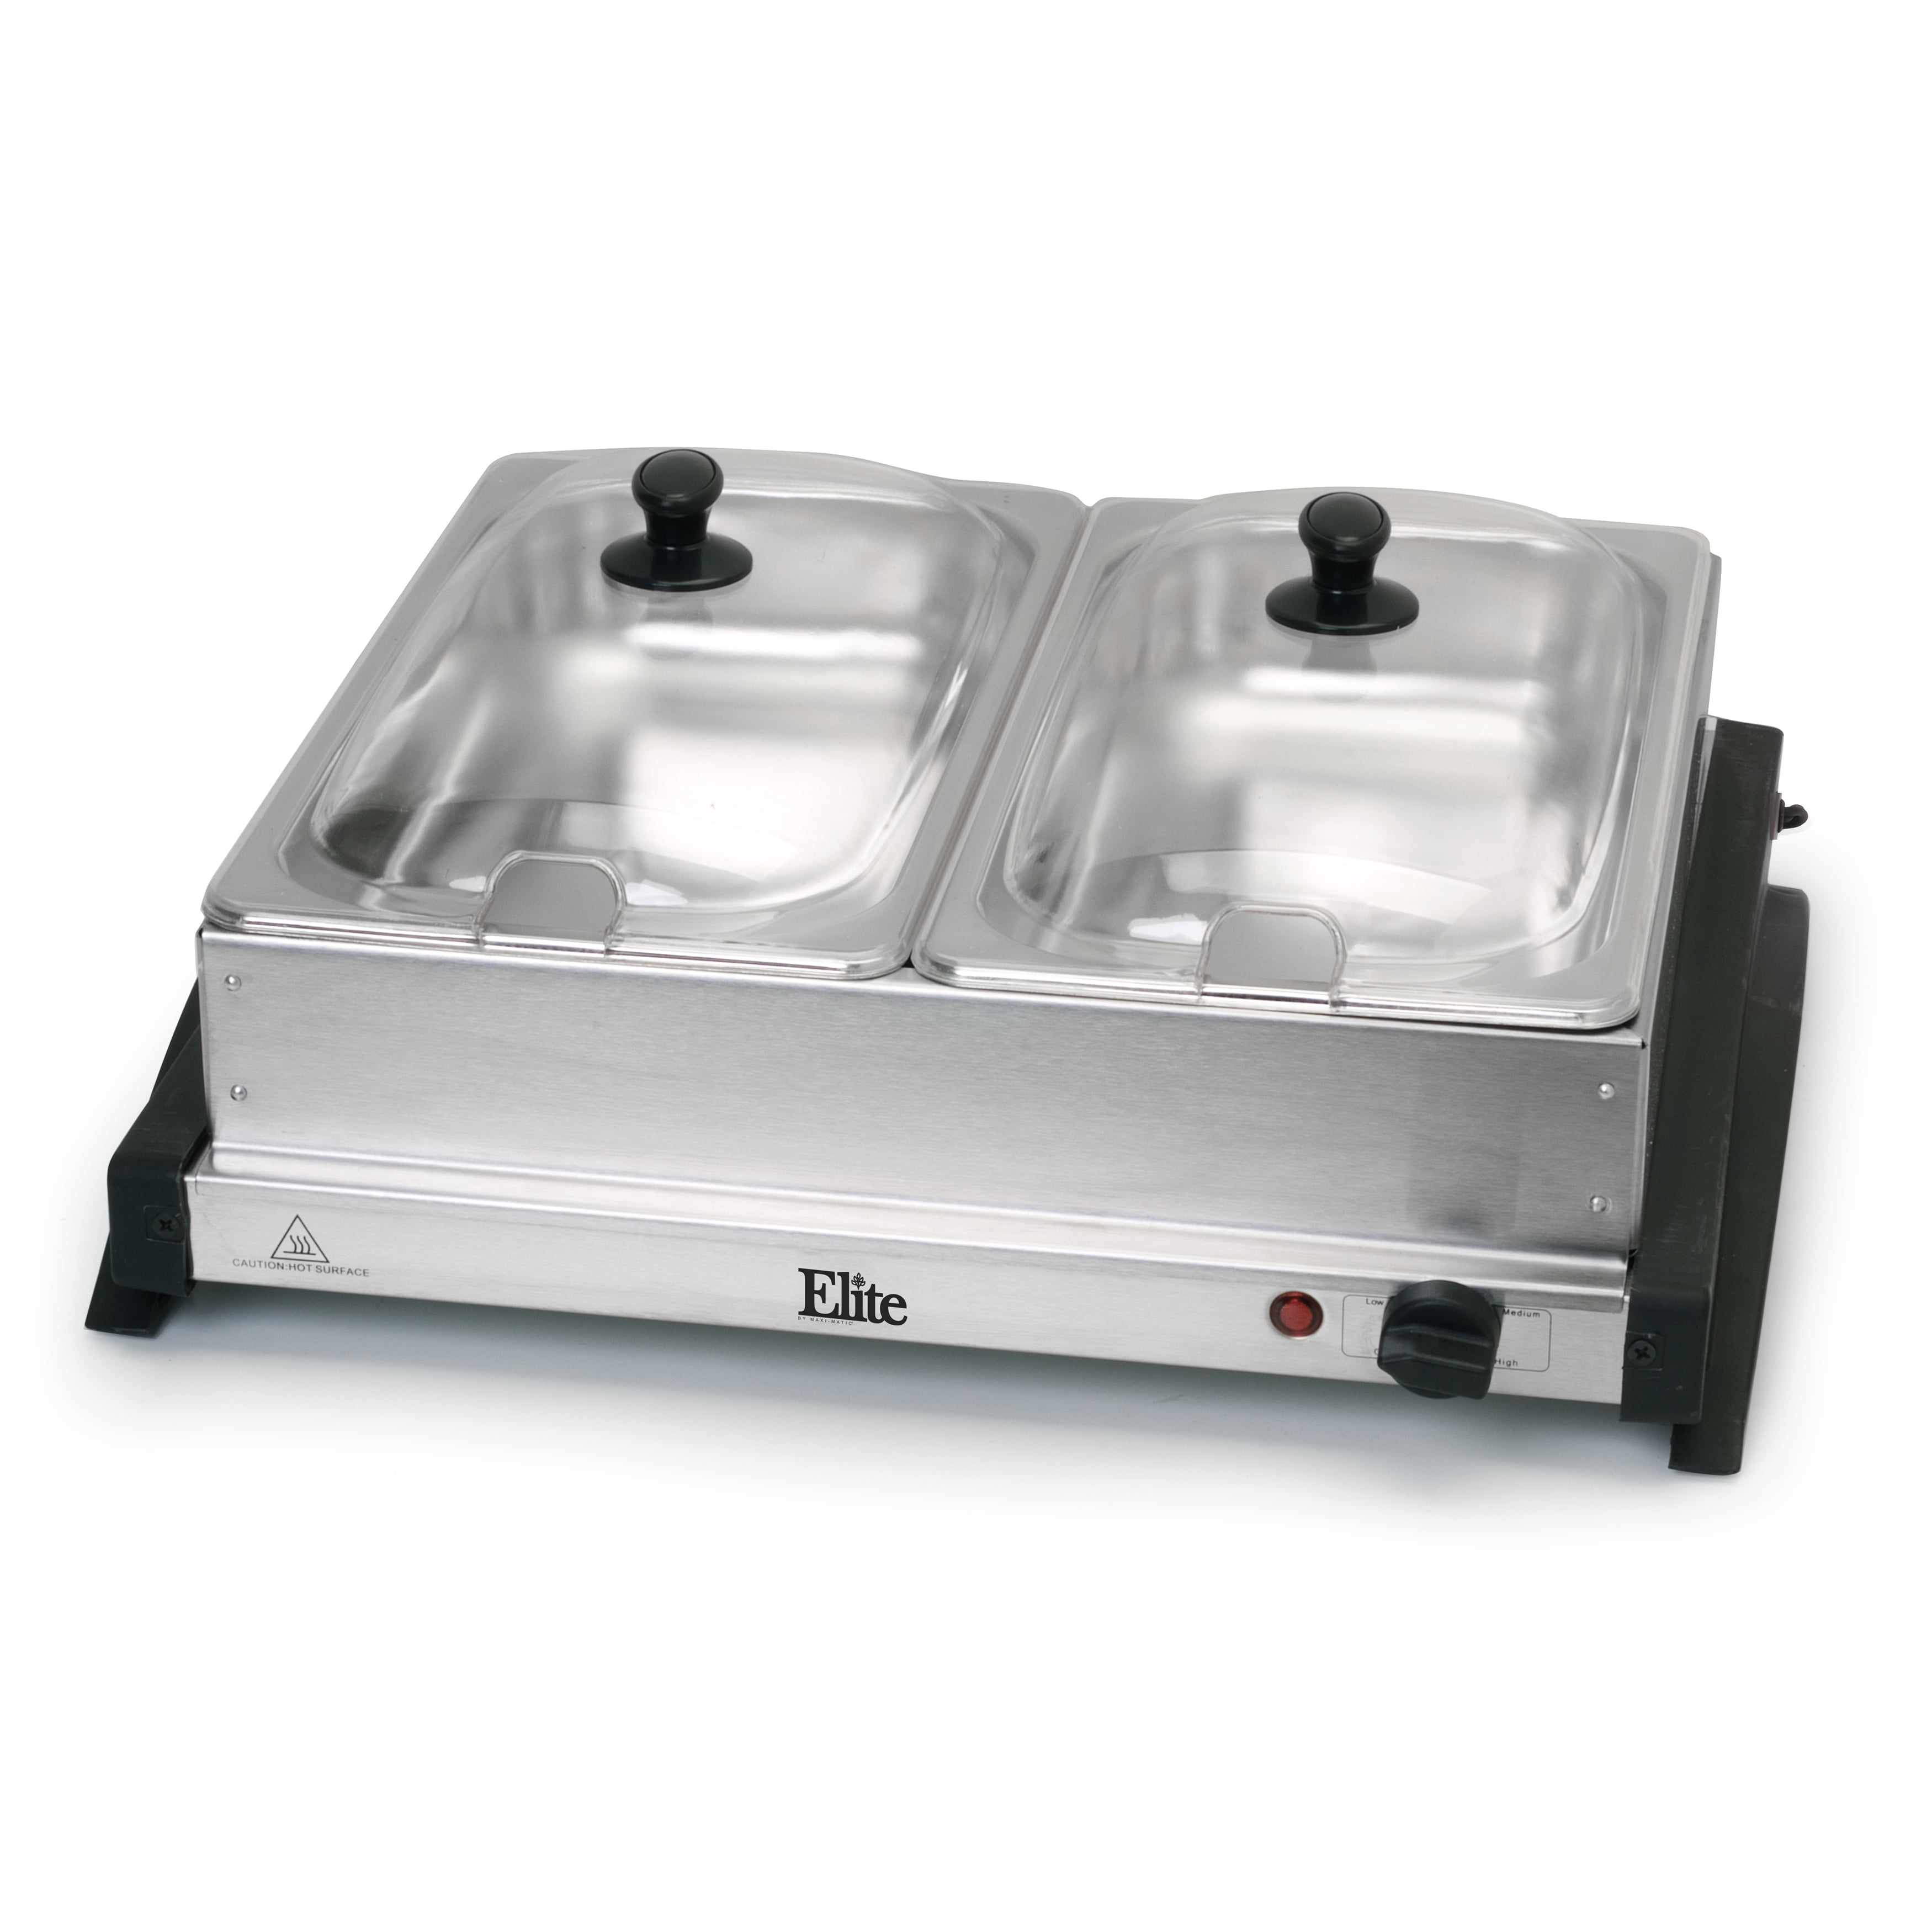 Dual Tray Stainless Steel Buffet Server [EWM-6122] – Shop Elite Gourmet -  Small Kitchen Appliances